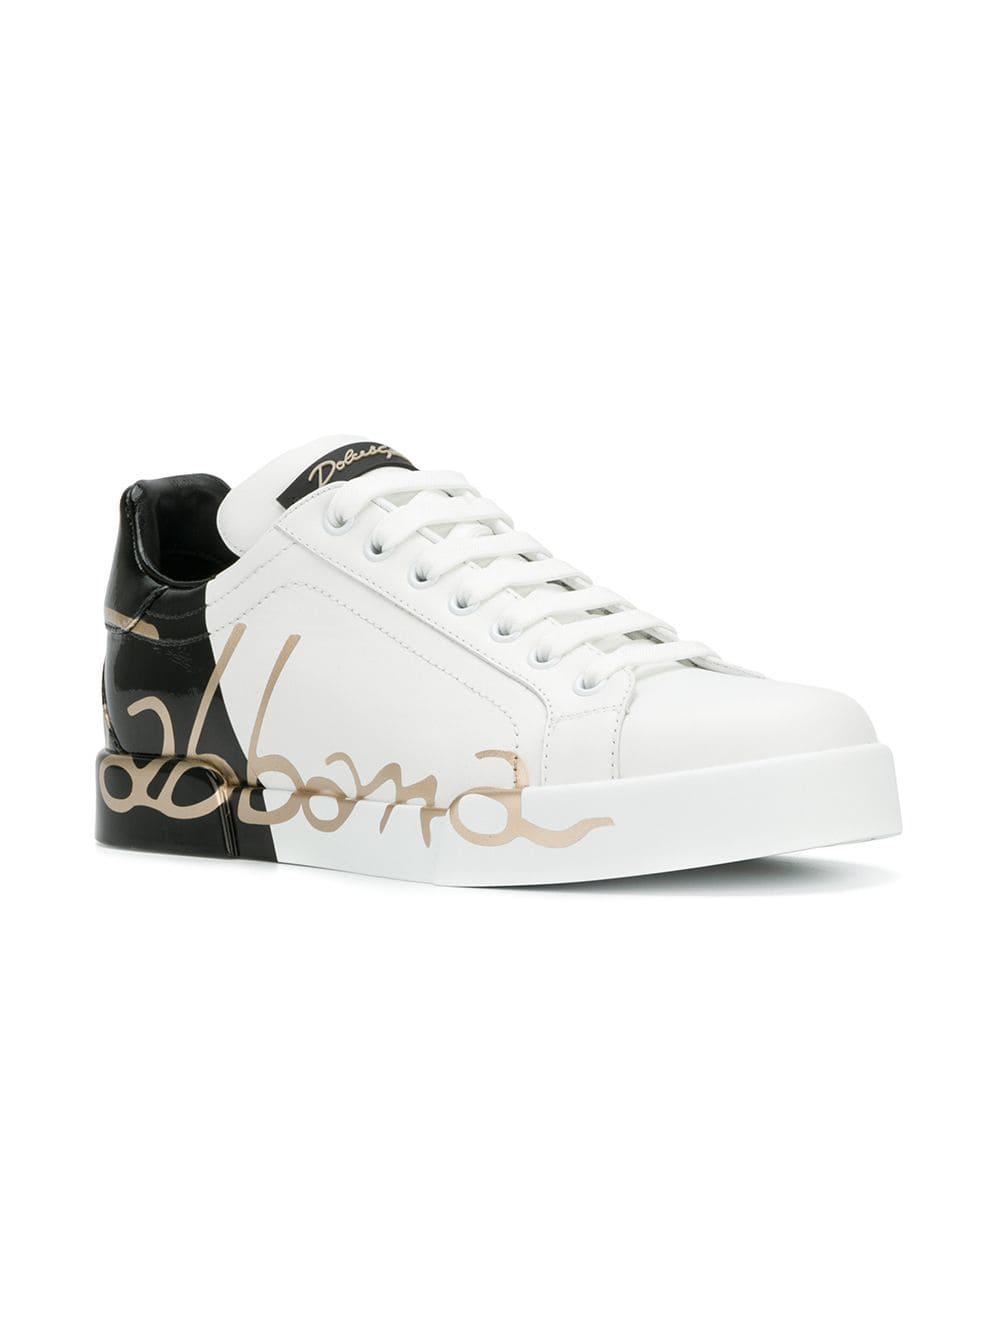 Dolce & Gabbana Leather Portofino Low-top Sneakers in White - Save 21% ...